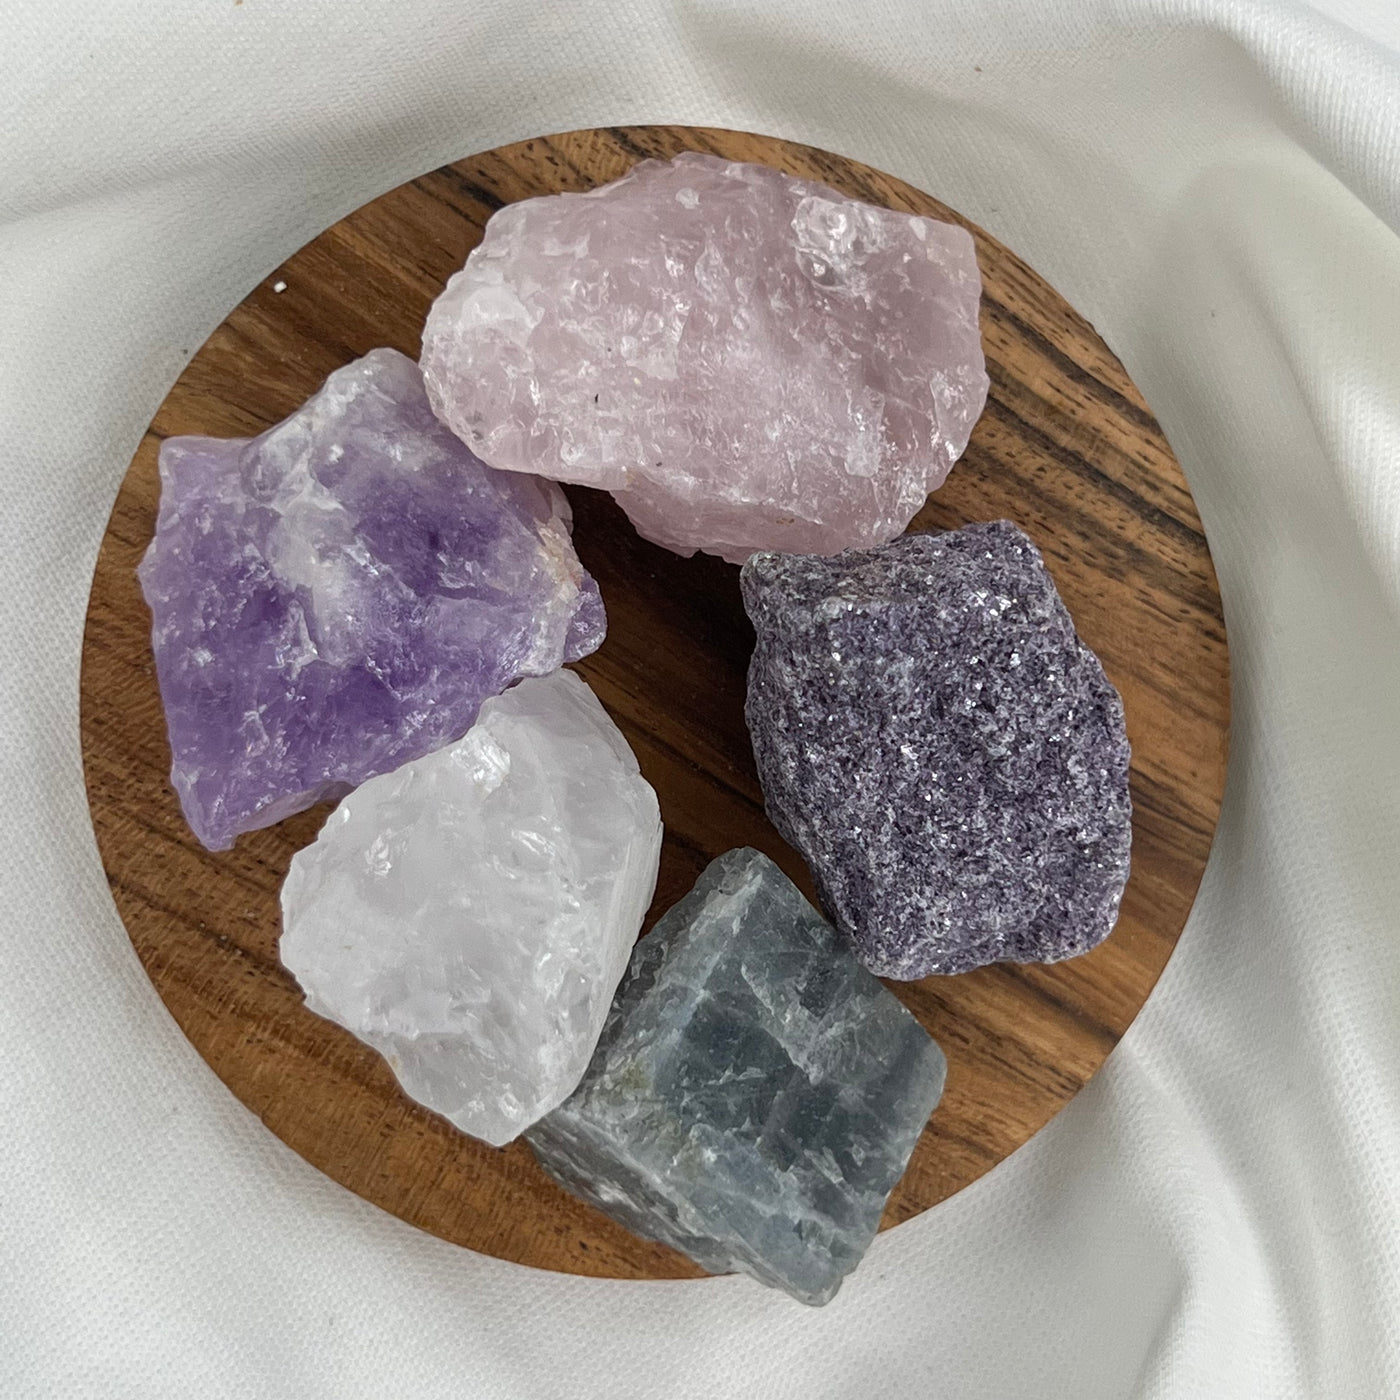 Ancestor & Spirit Guides Crystal Set - Soulfulvibesco